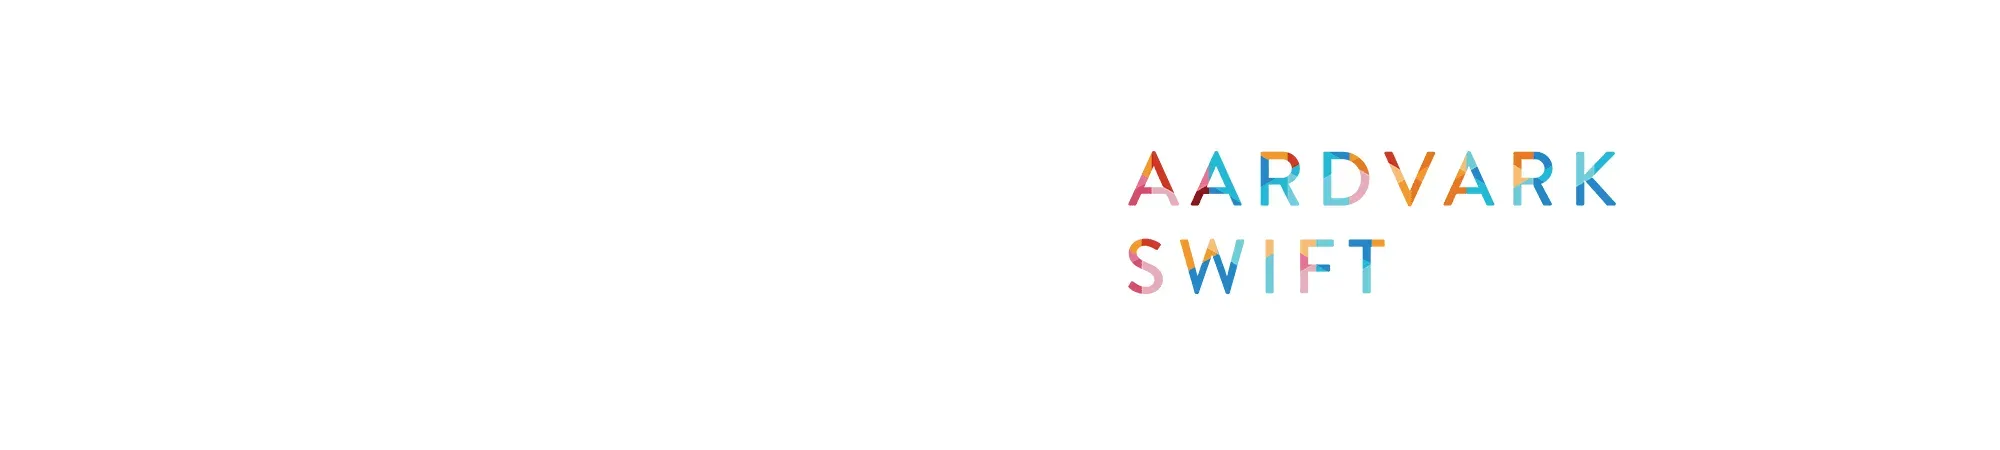 Aardvark Swift Logo Banner